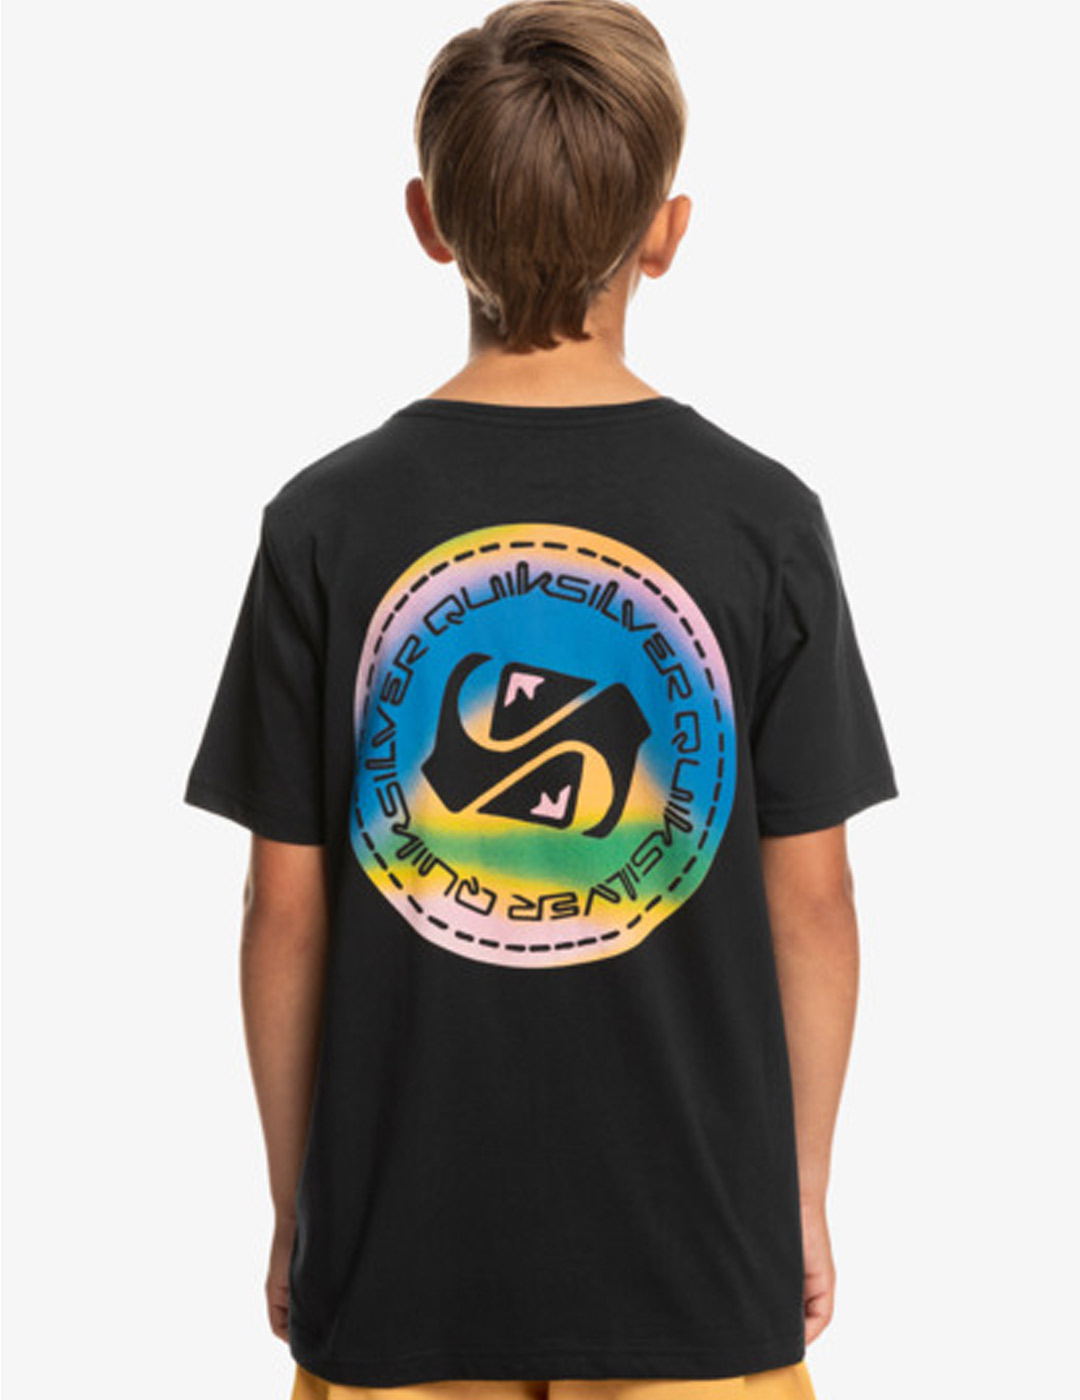 camiseta manga corta quksilver niño COLOURFLOW negro